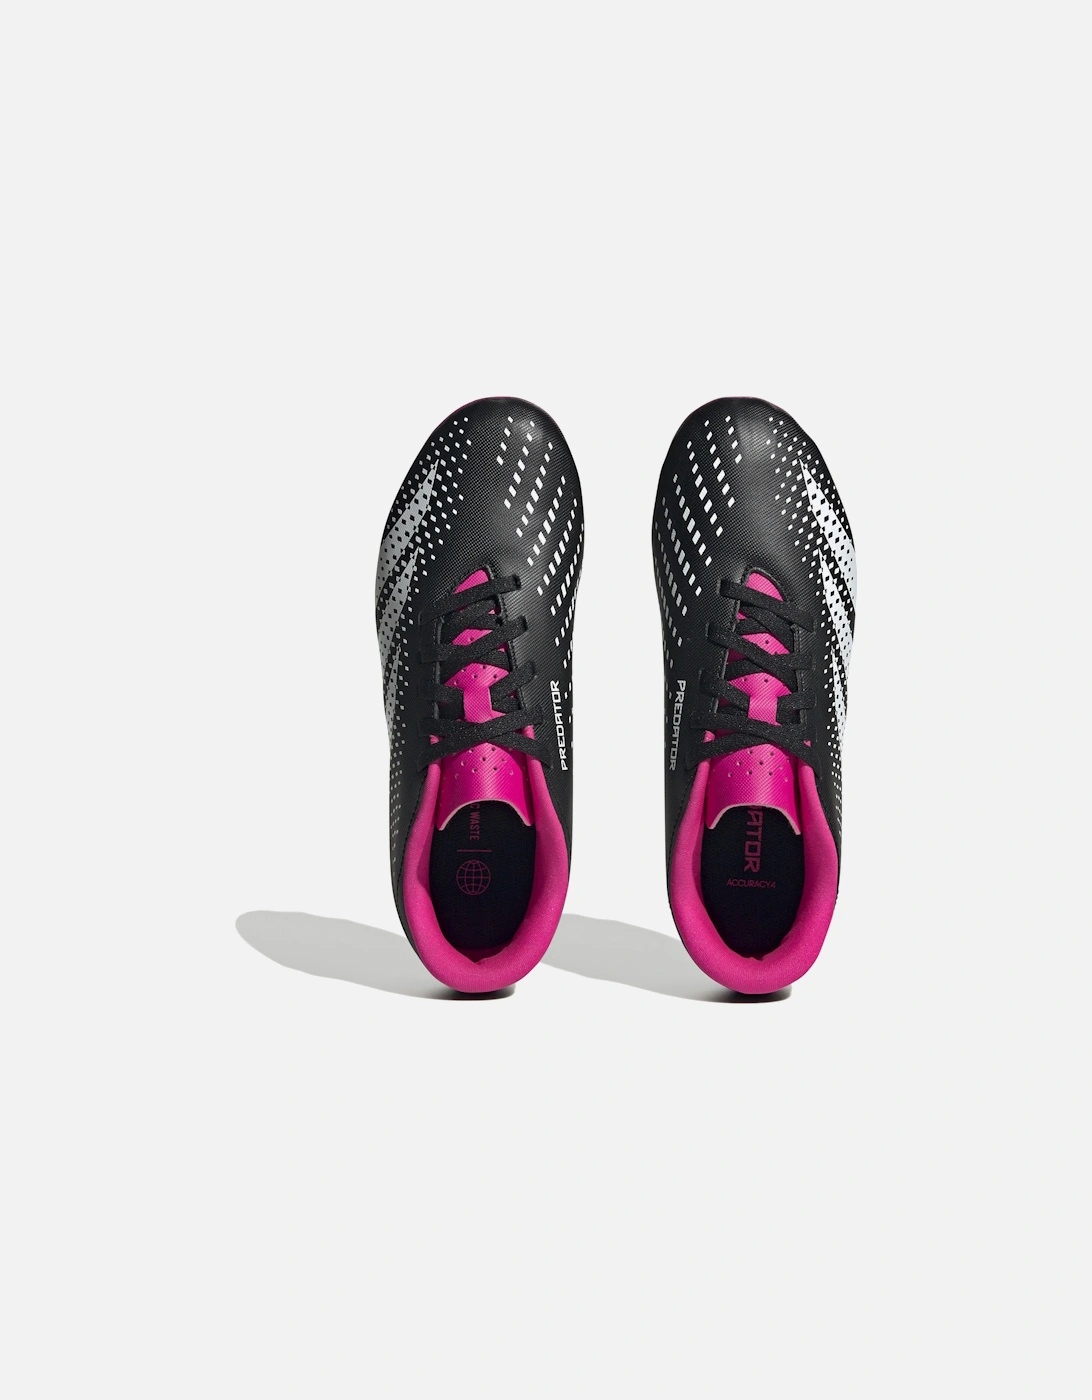 Juniors Predator Accuracy.4 Football Boots (Black/Pink)